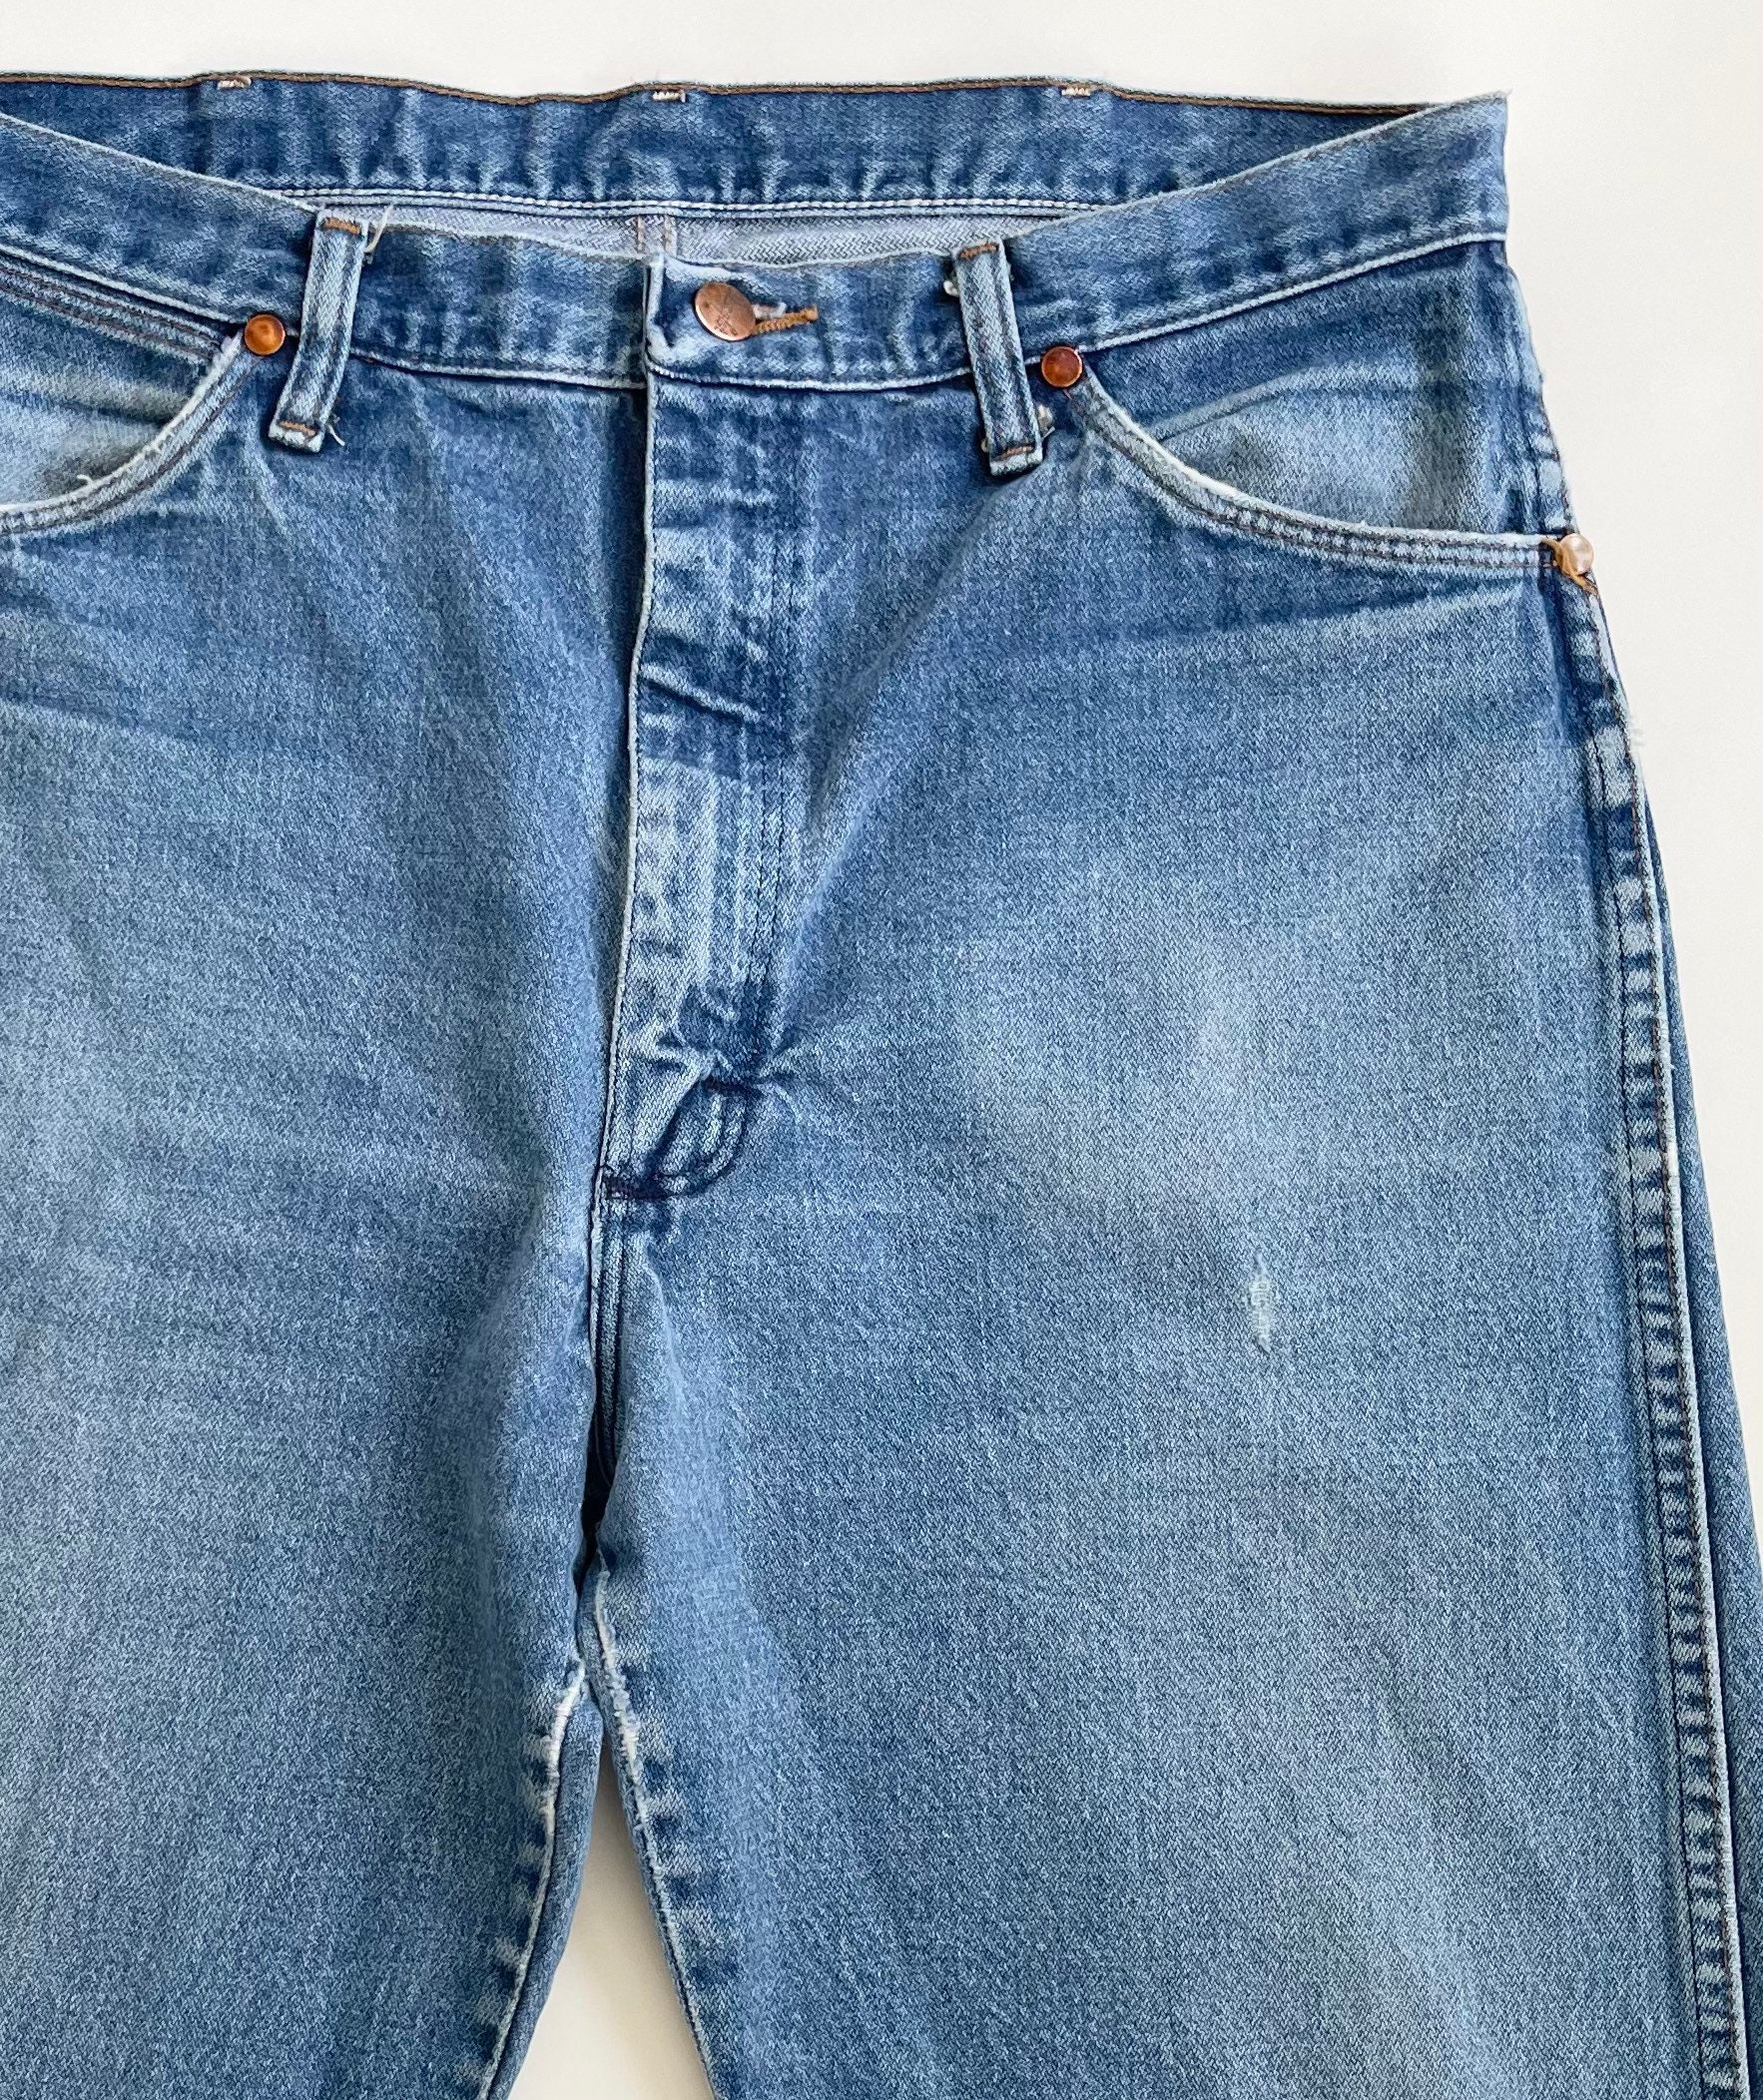 s Wrangler Denim Jeans Made in USA Faded Medium Blue Vintage   Etsy